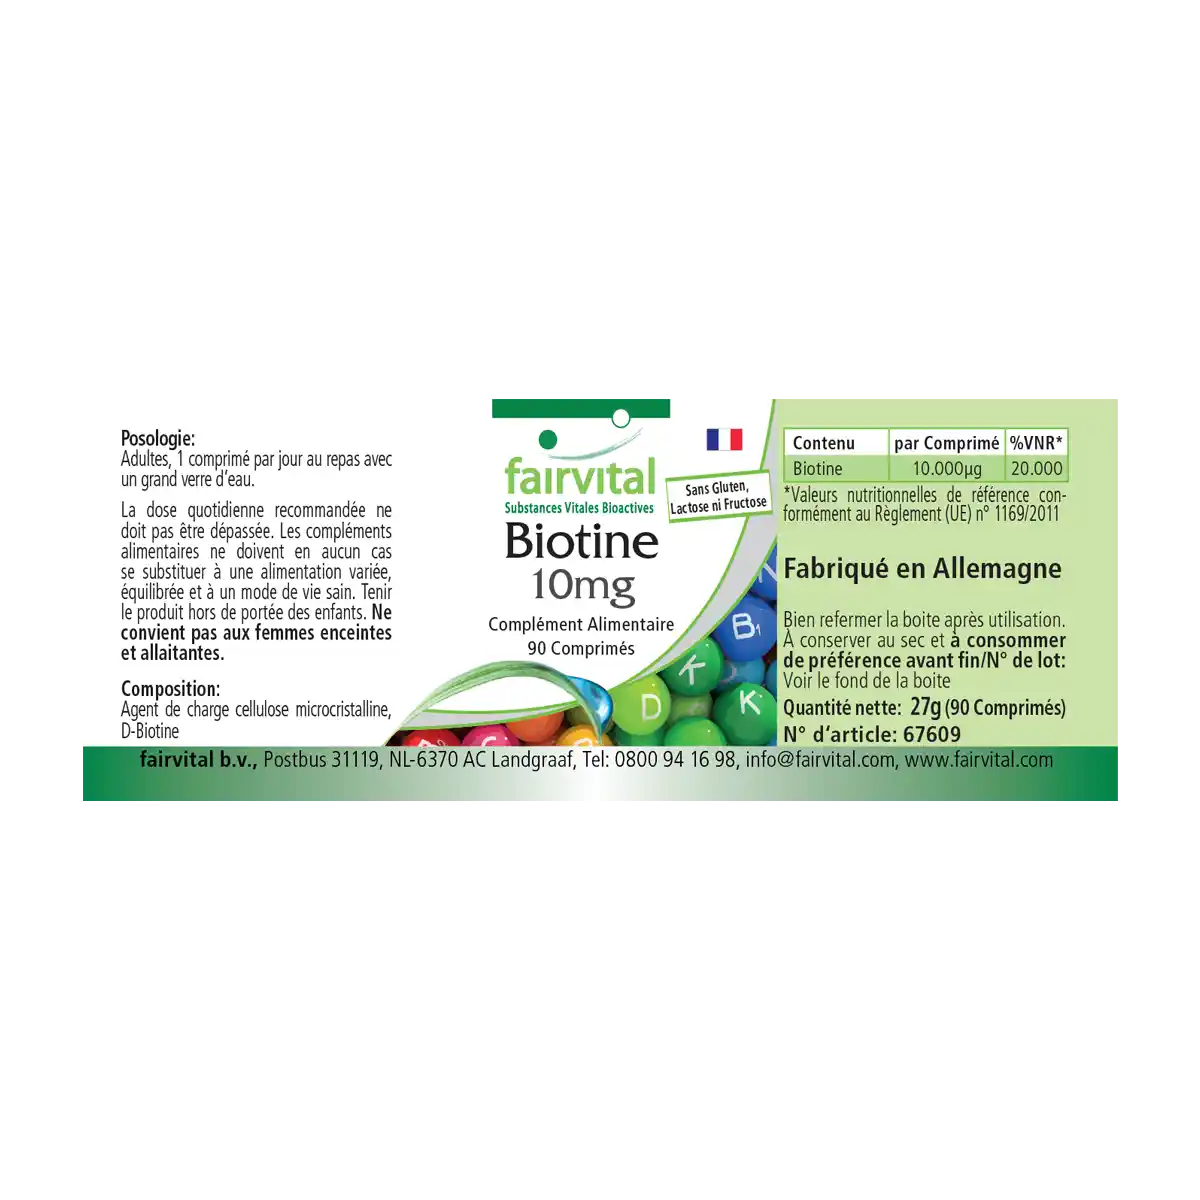 Biotine 10mg - 90 tabletten